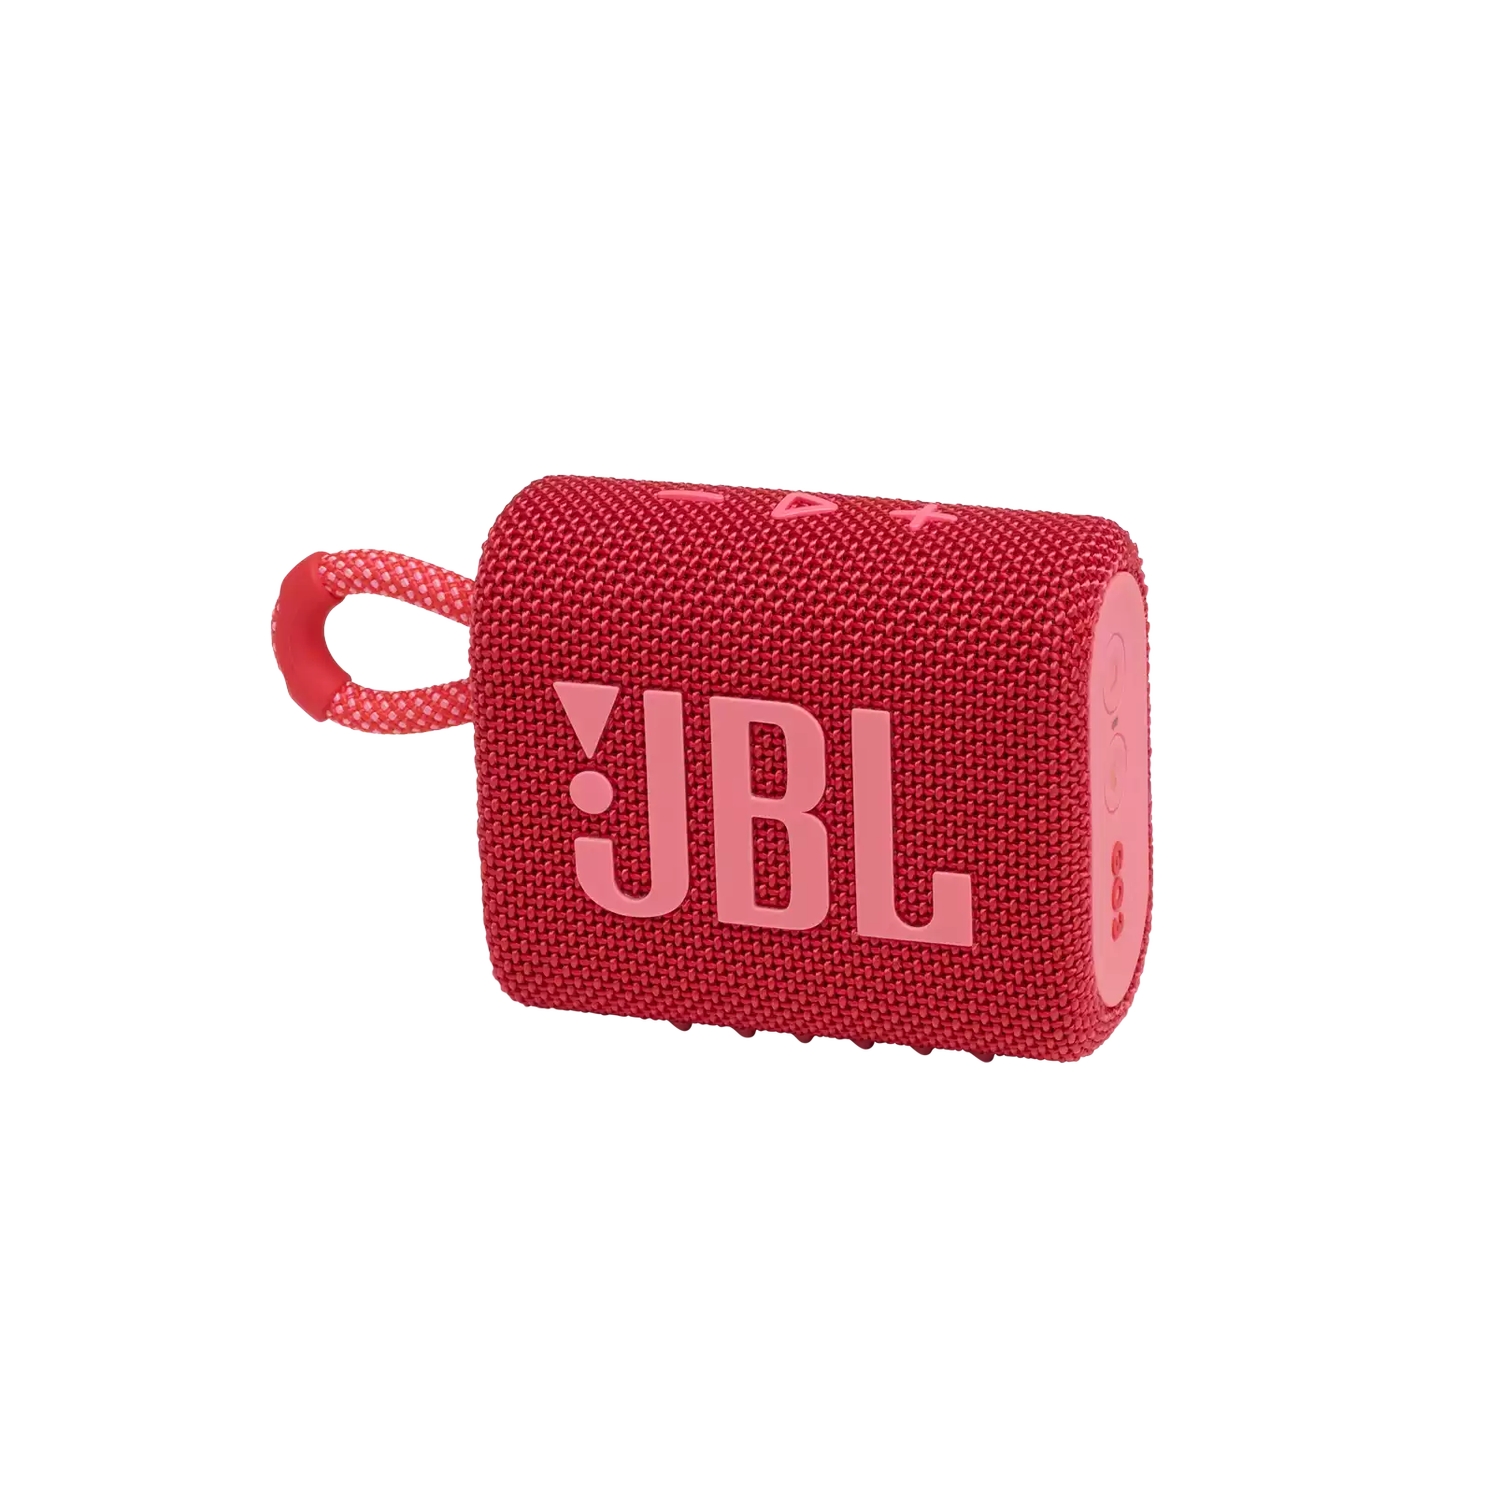 Портативная акустика JBL GO 3 красная портативная акустика jbl go 2 оранжевый